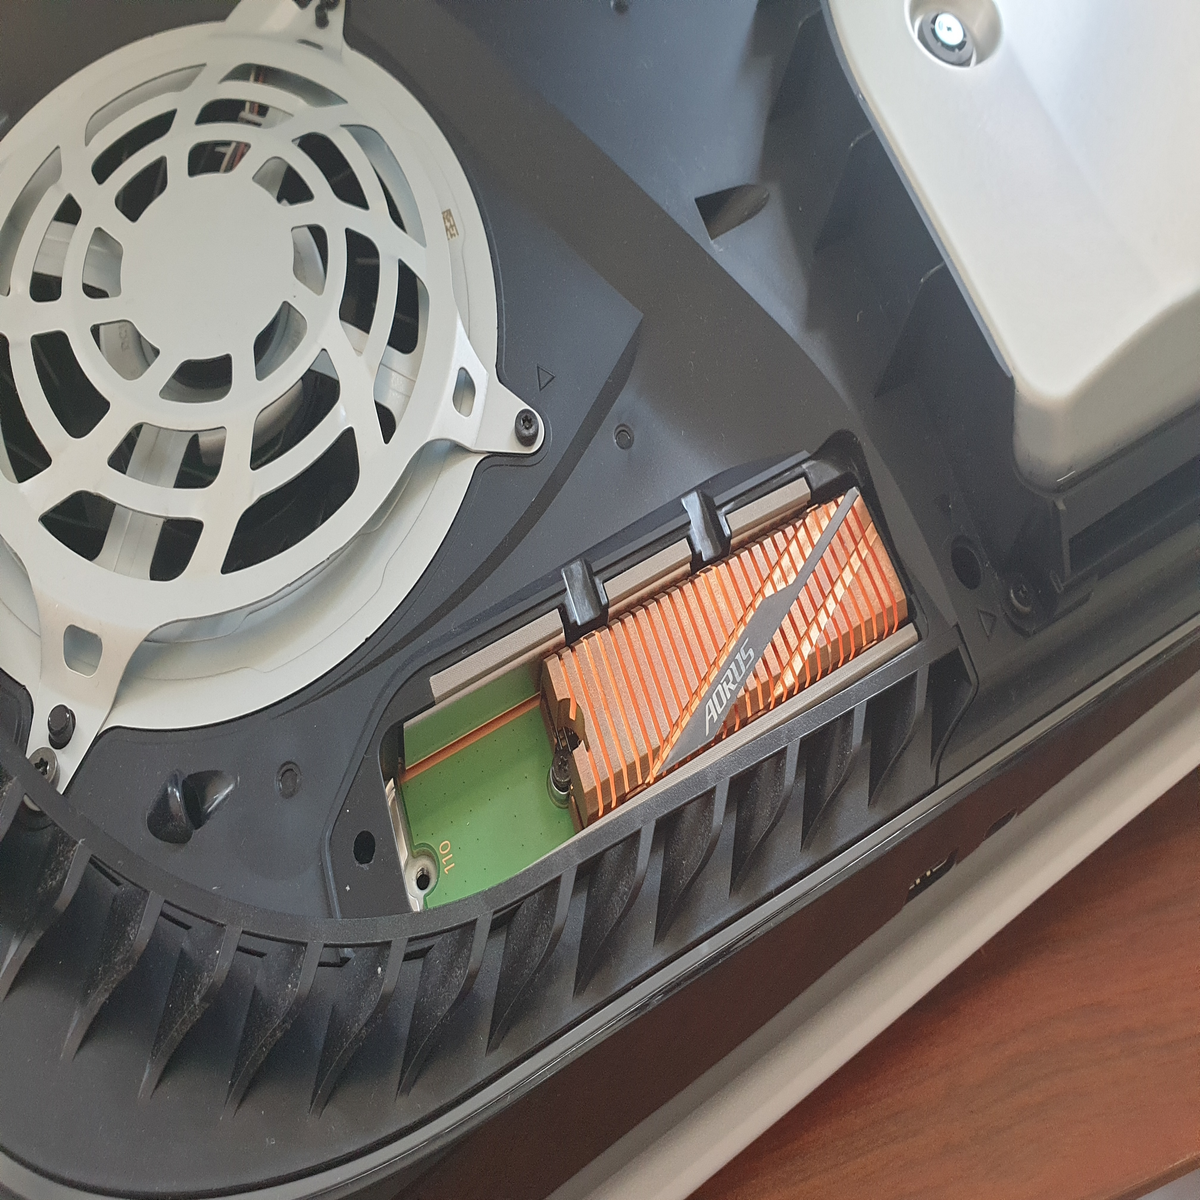 SSD no Playstation 5: mostramos como instalar e testamos a performance!